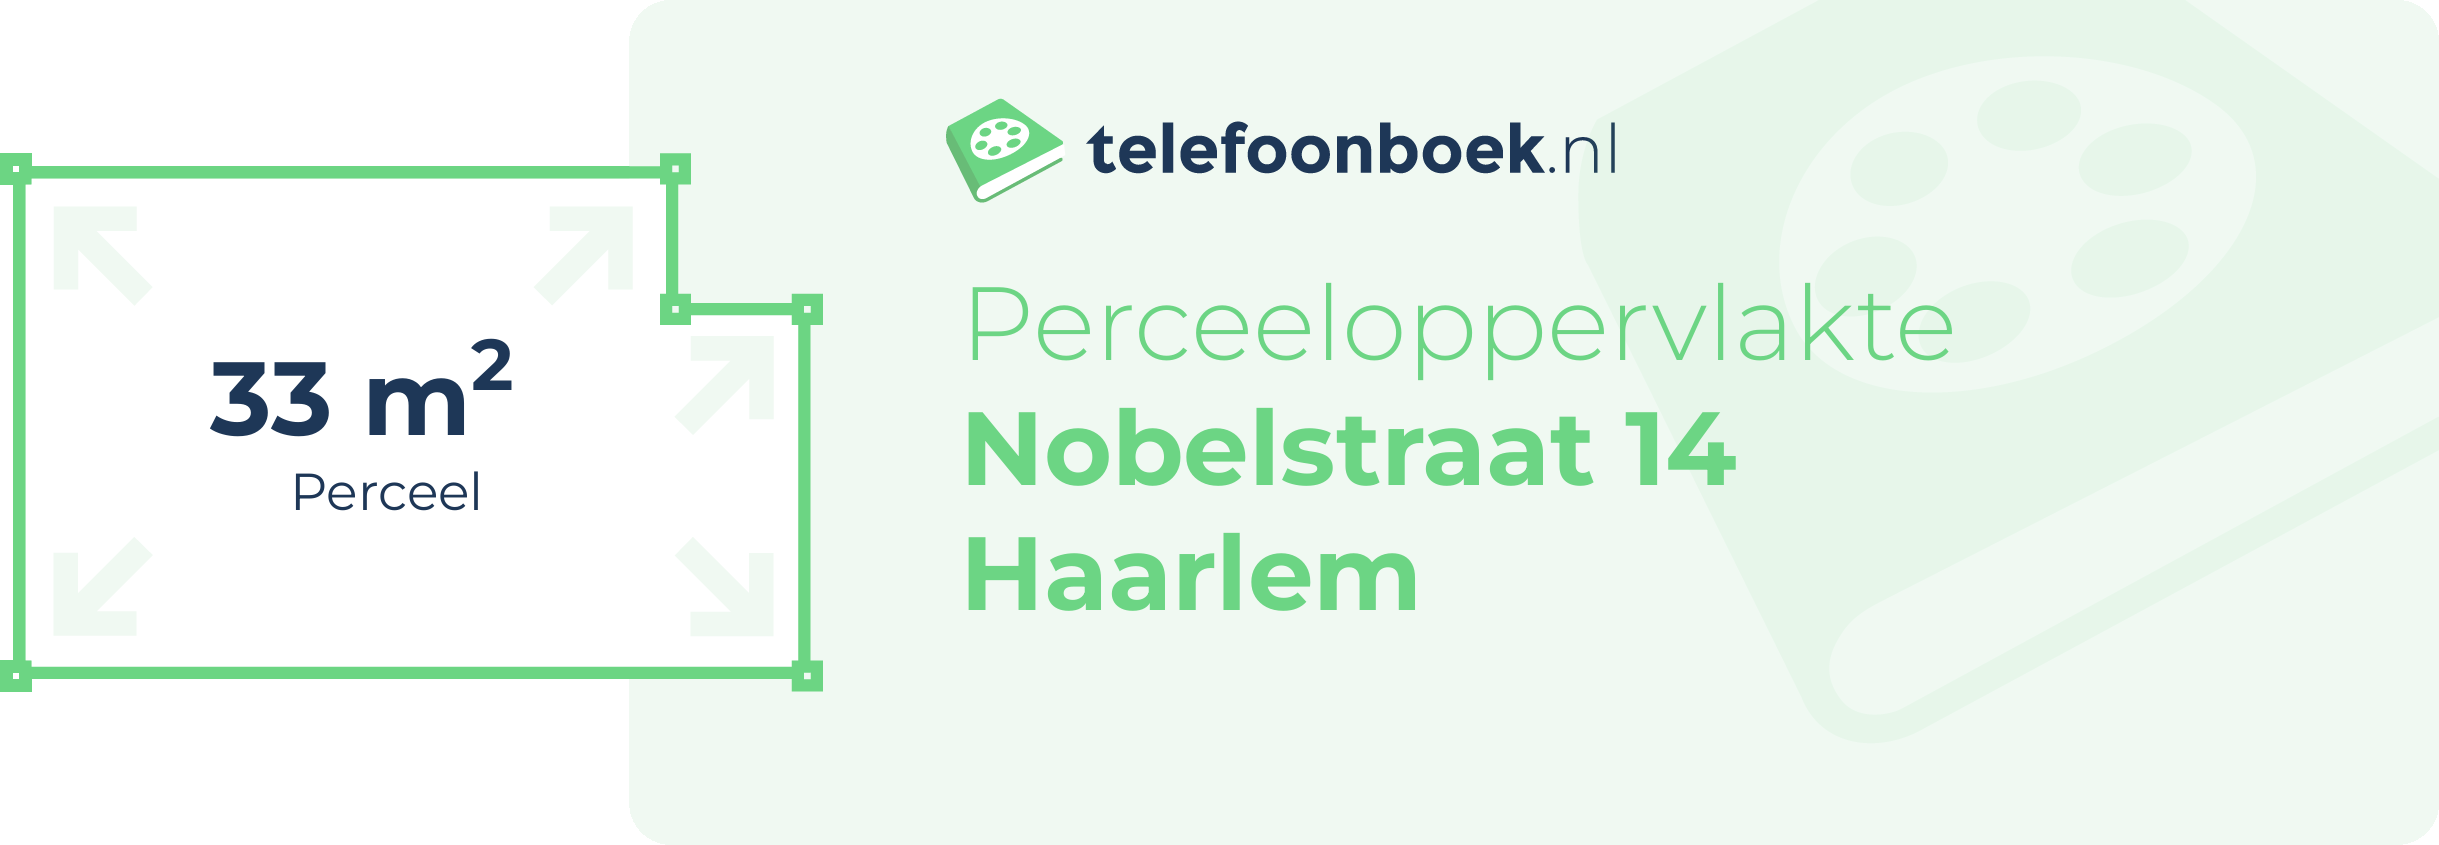 Perceeloppervlakte Nobelstraat 14 Haarlem